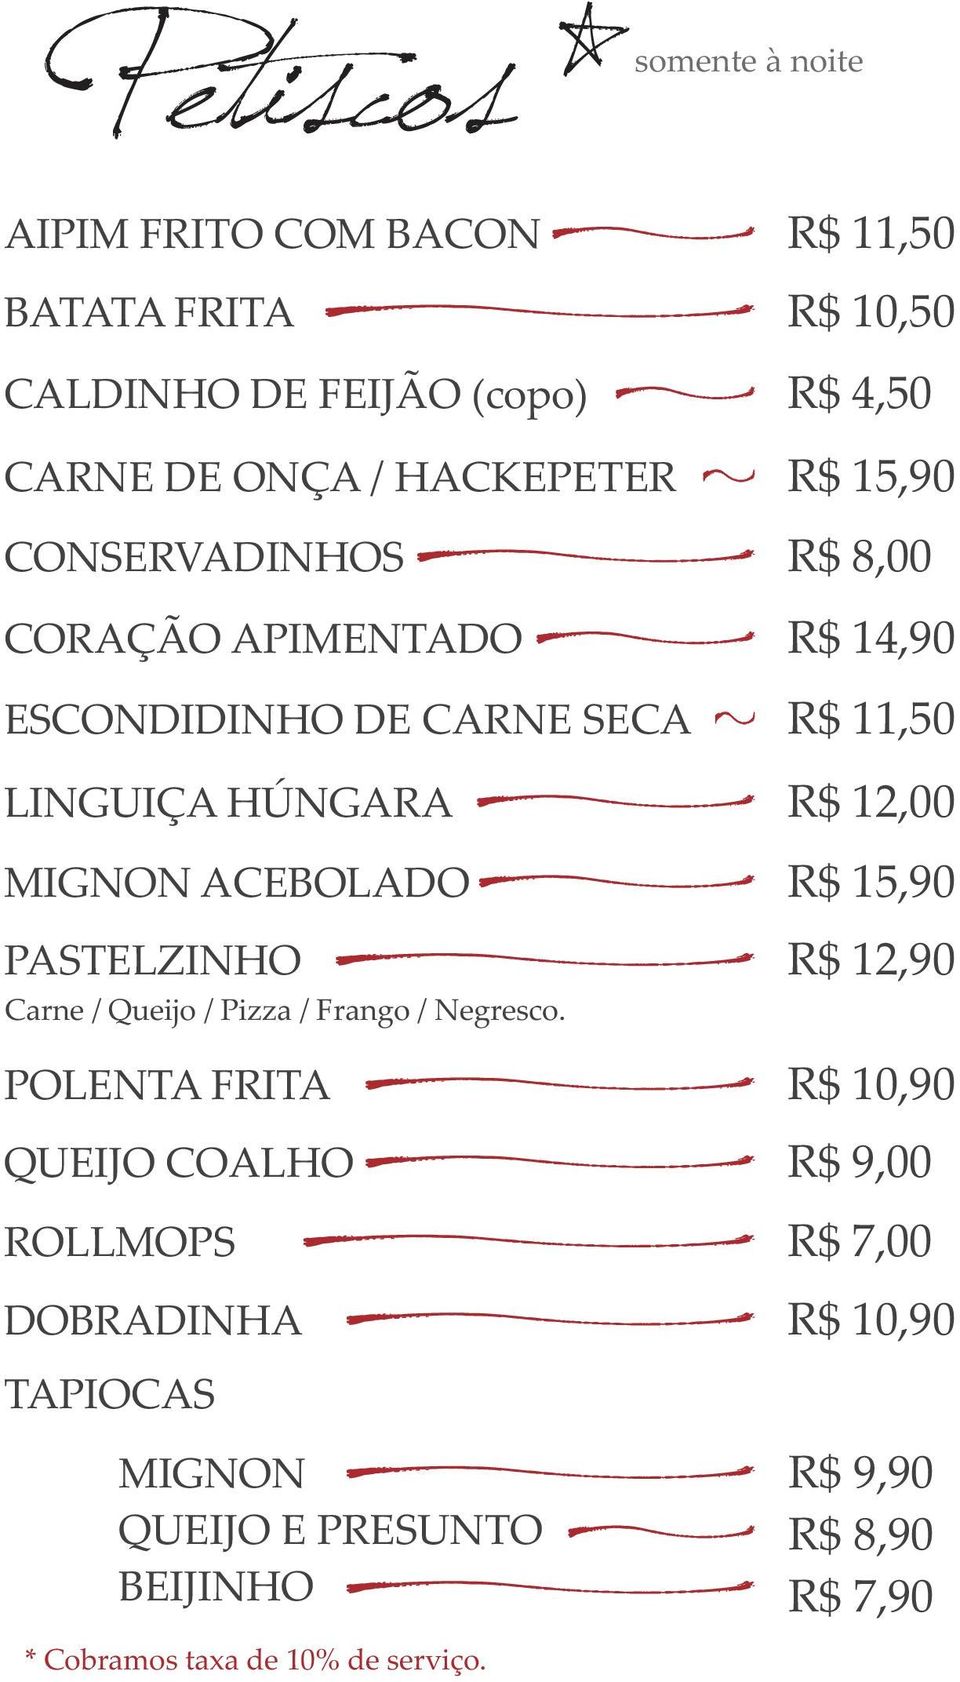 MIGNON ACEBOLADO R$ 15,90 PASTELZINHO Carne / Queijo / Pizza / Frango / Negresco.